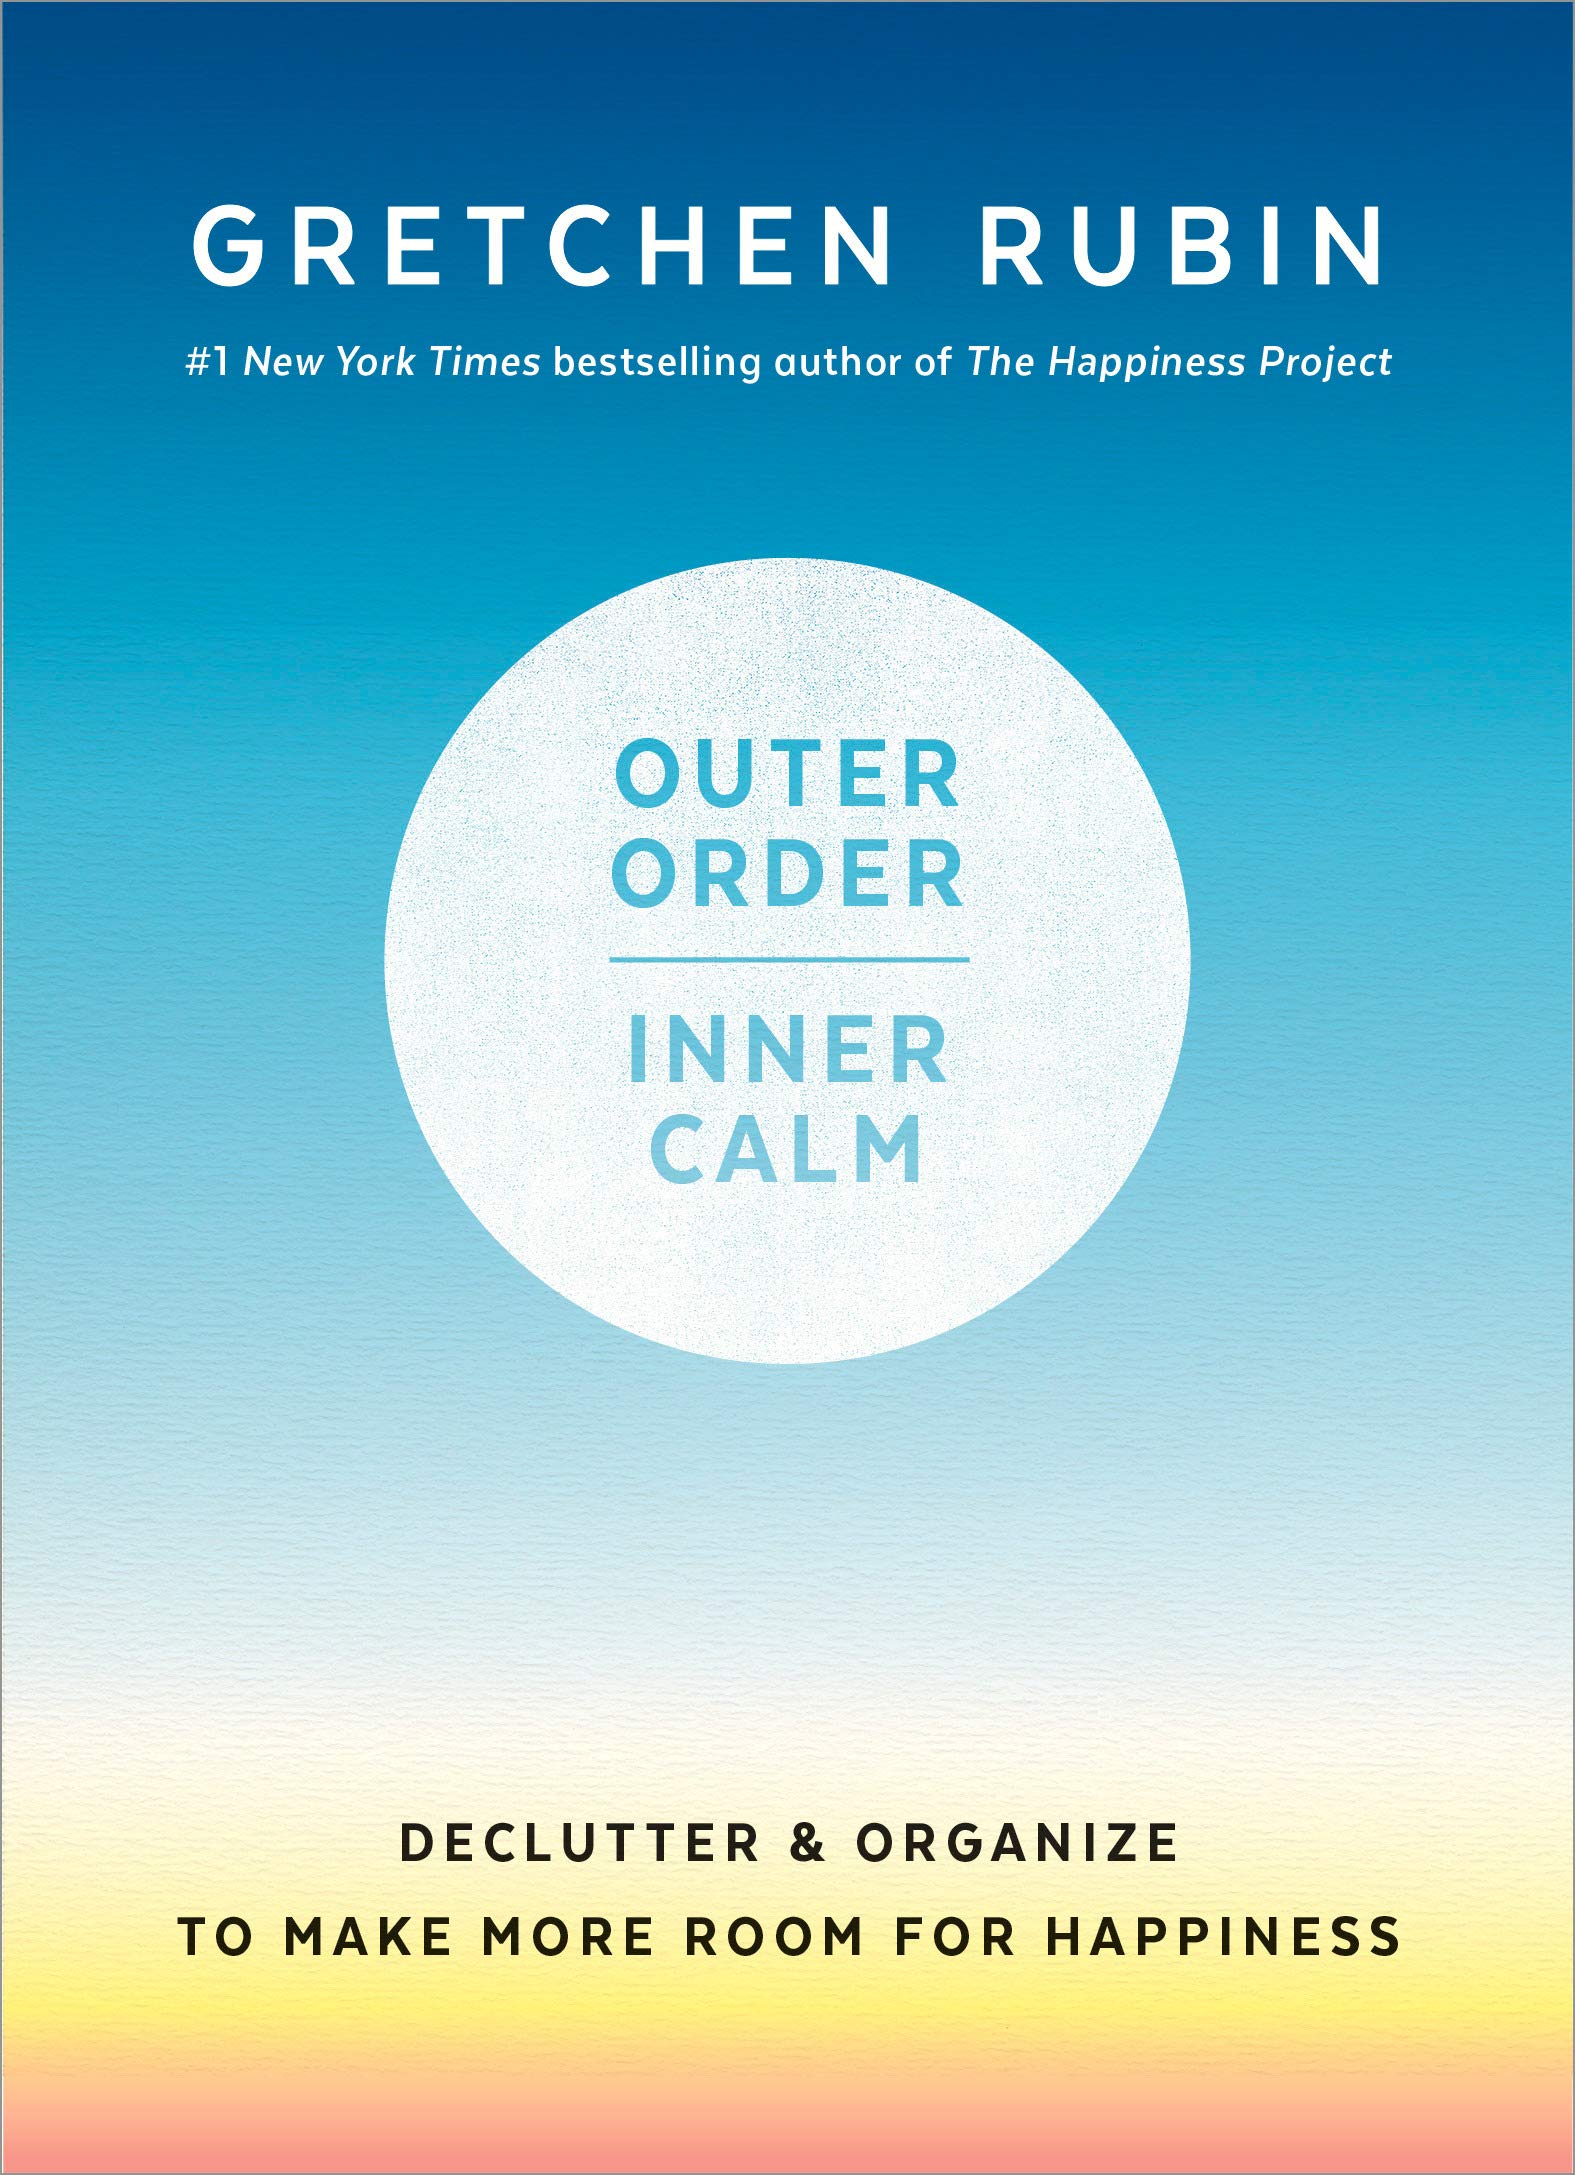 Outer Order, Inner Calm | Gretchen Rubin image0